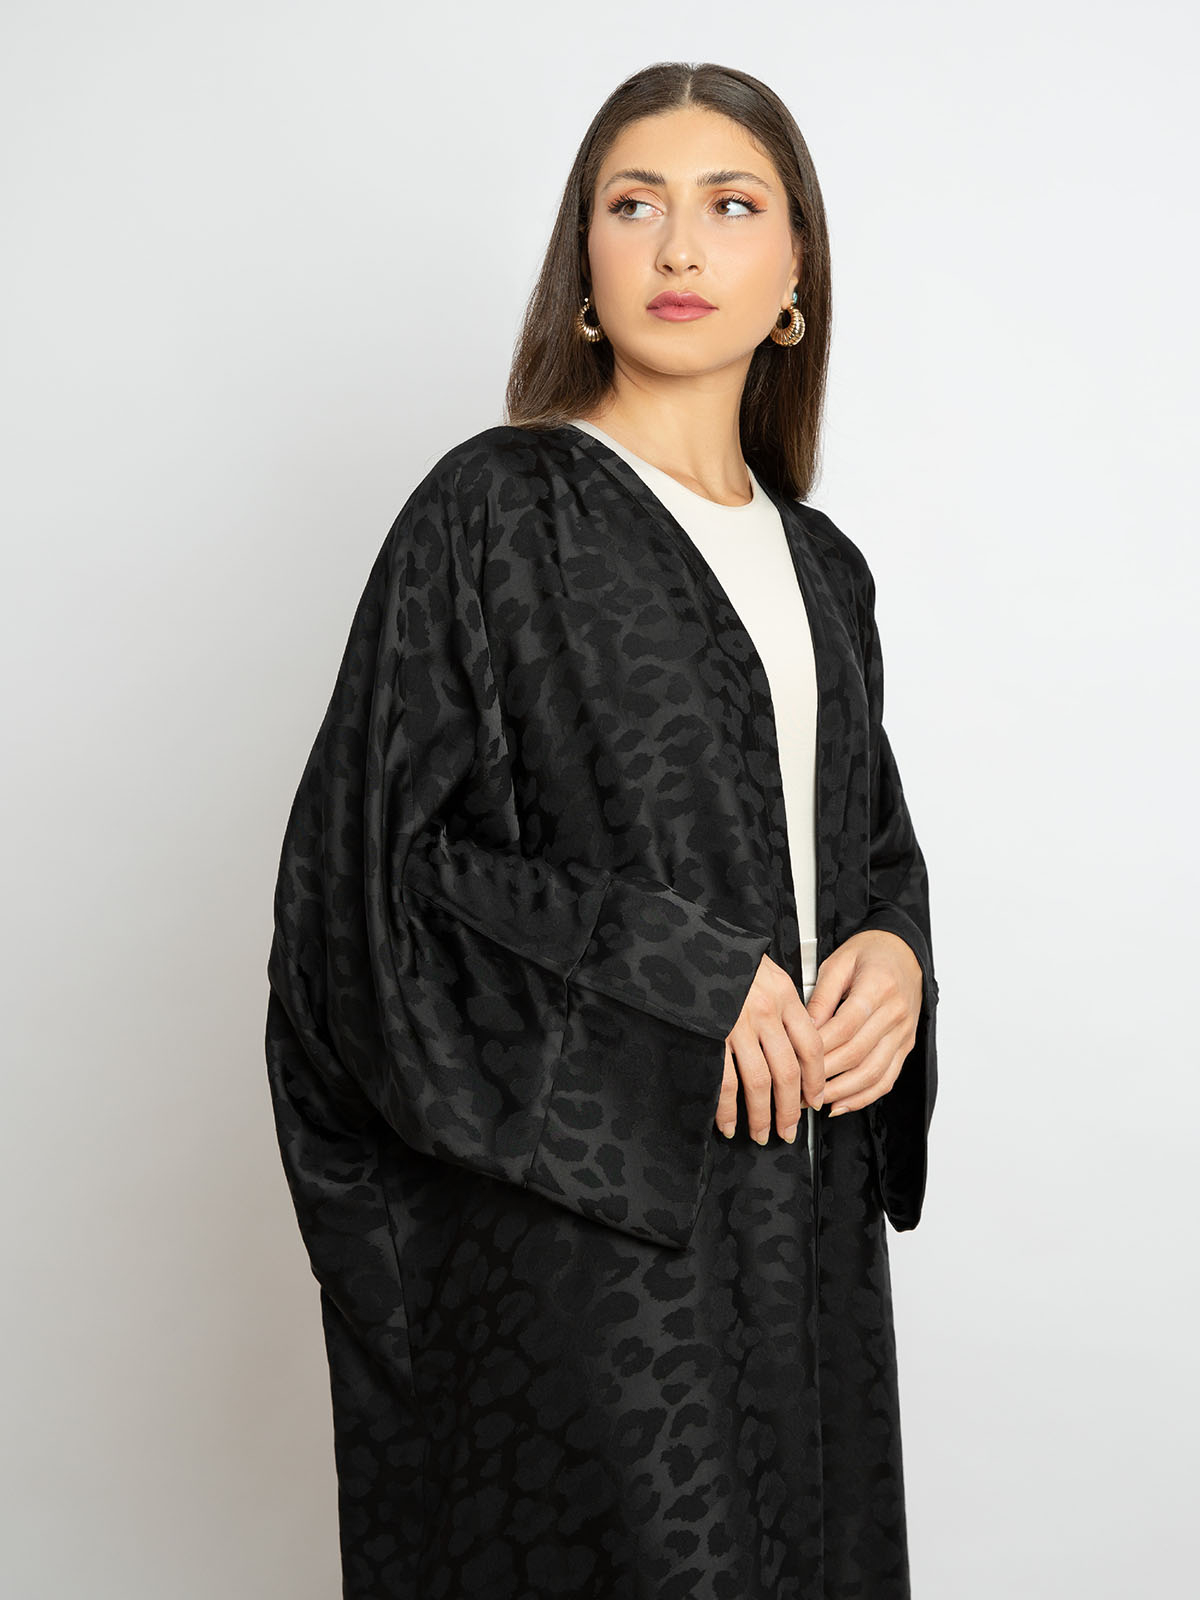 Kaafmeem women clothing wide fit black color long fancy open abaya with cheetah print in satin feel fabric